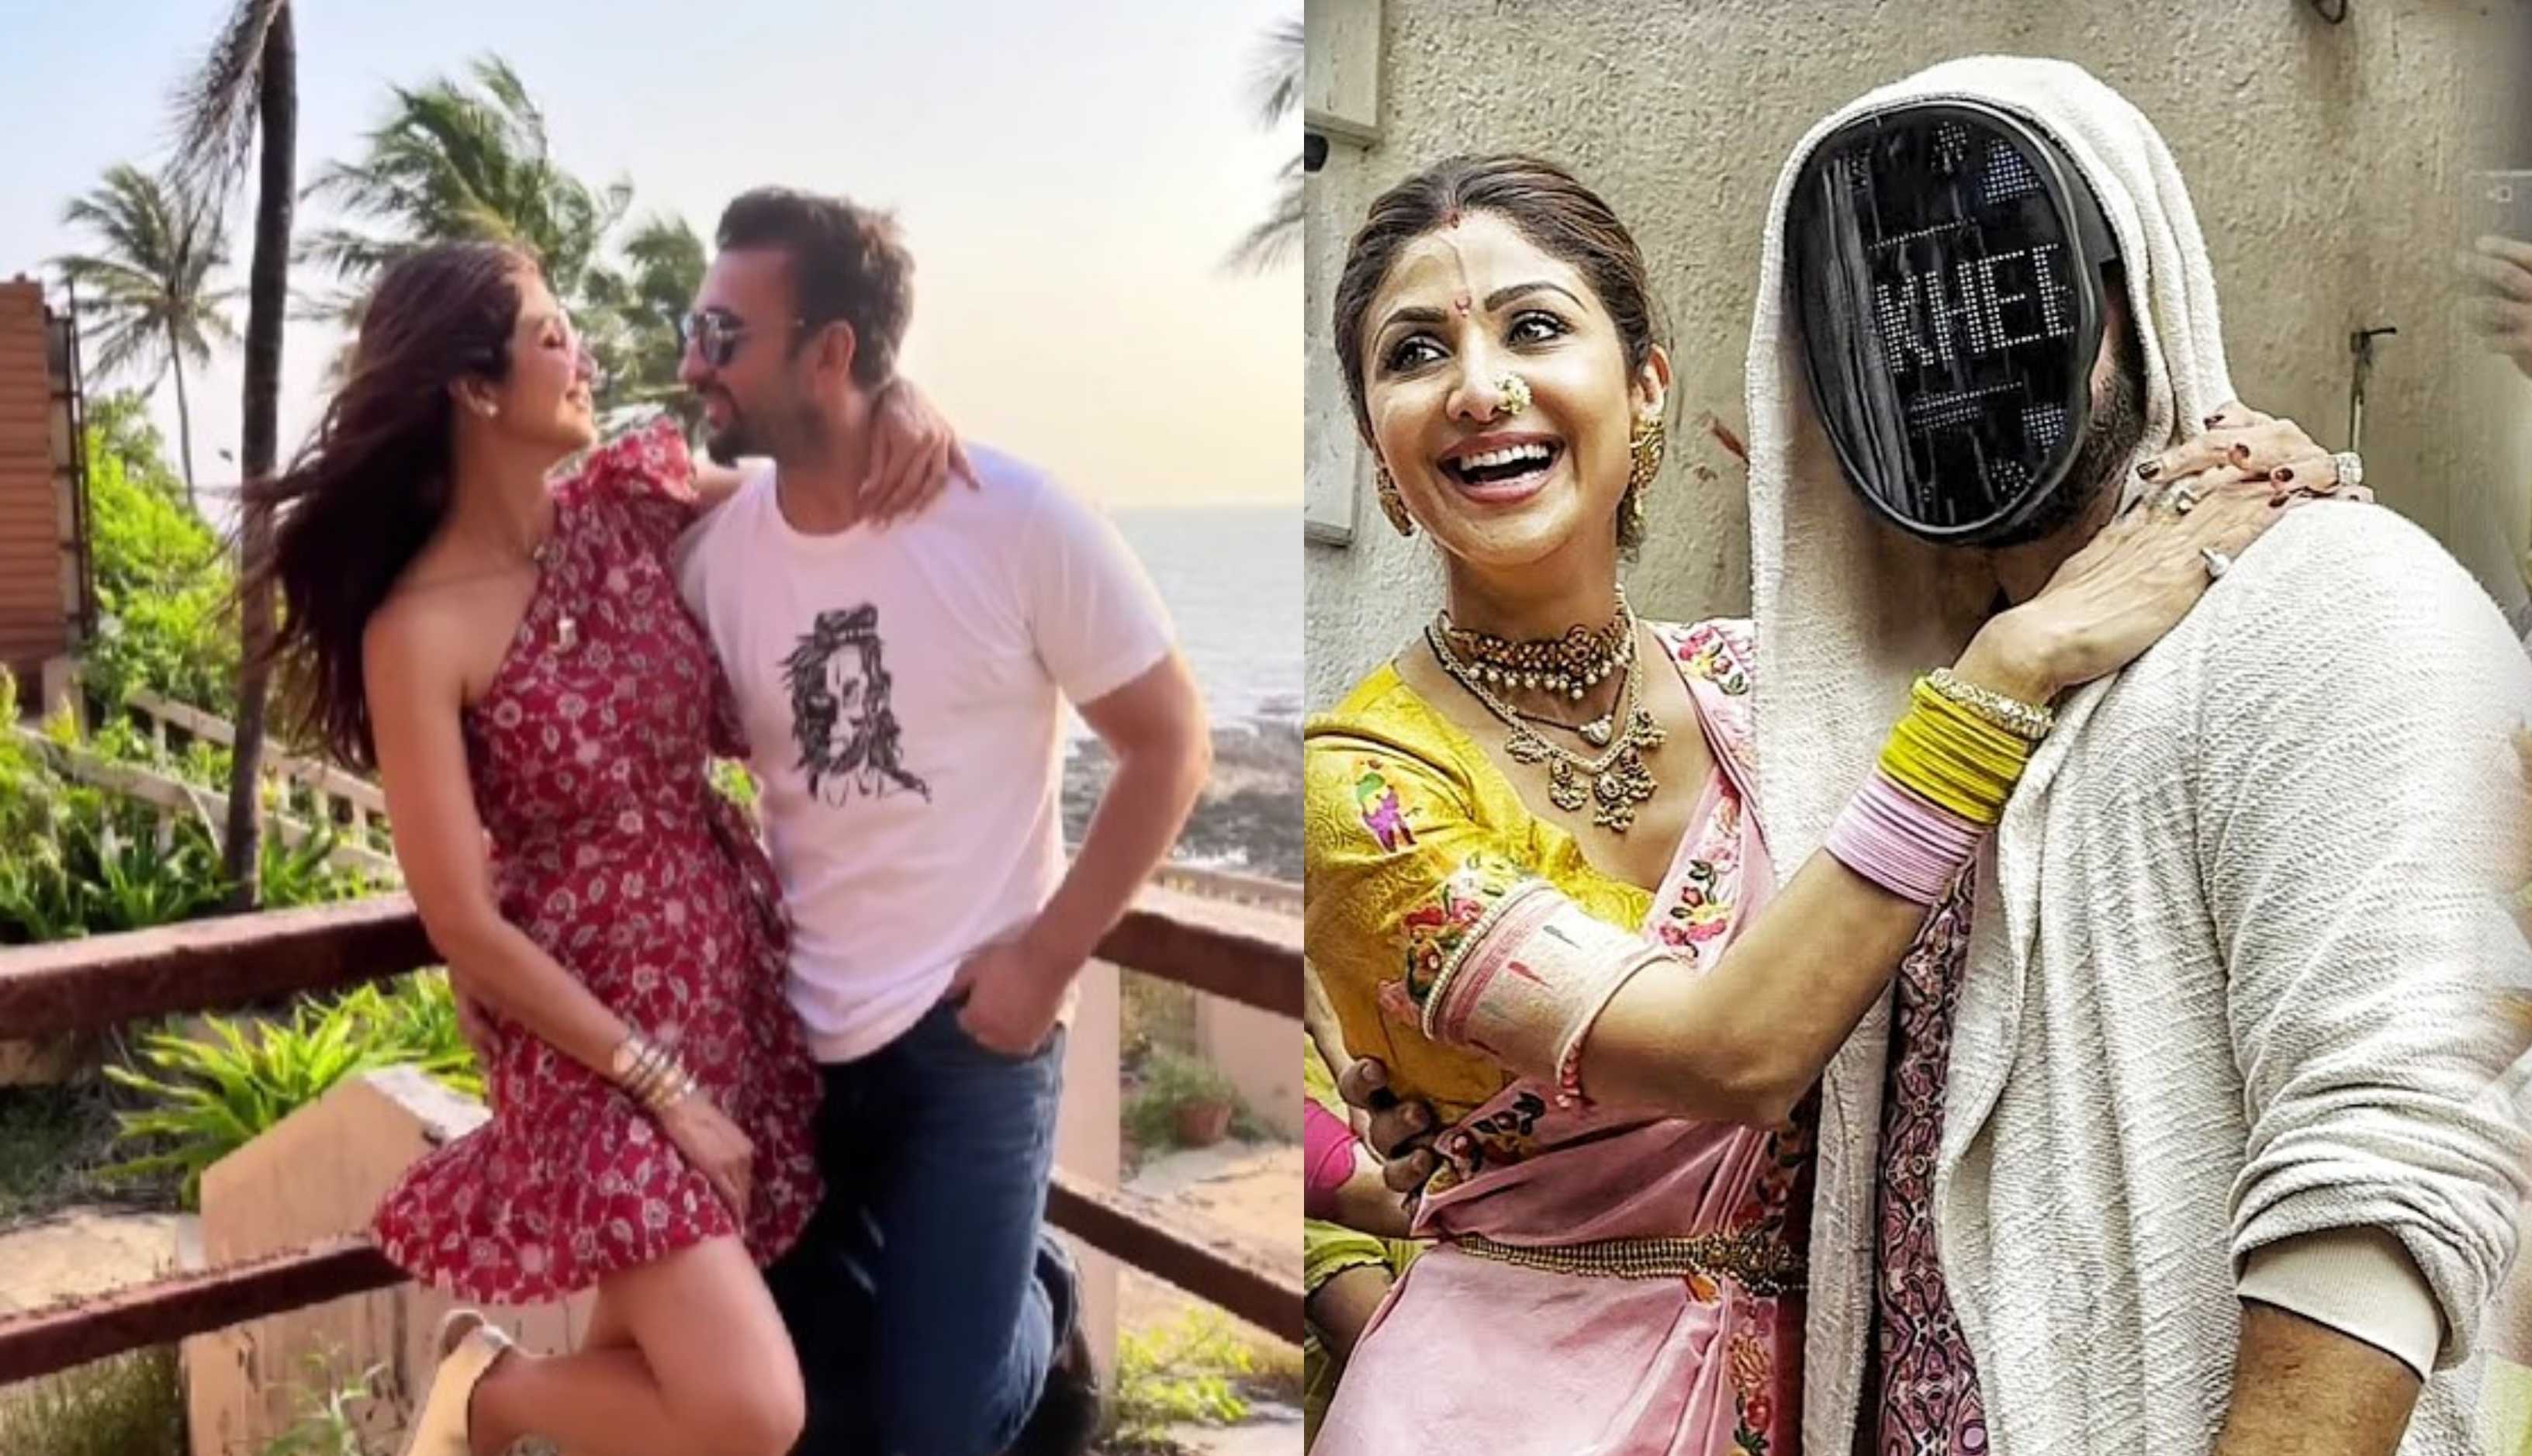 ‘Lame gimmick’: Shilpa Shetty’s husband Raj Kundra announces separation after UT 69 trailer release, netizens react